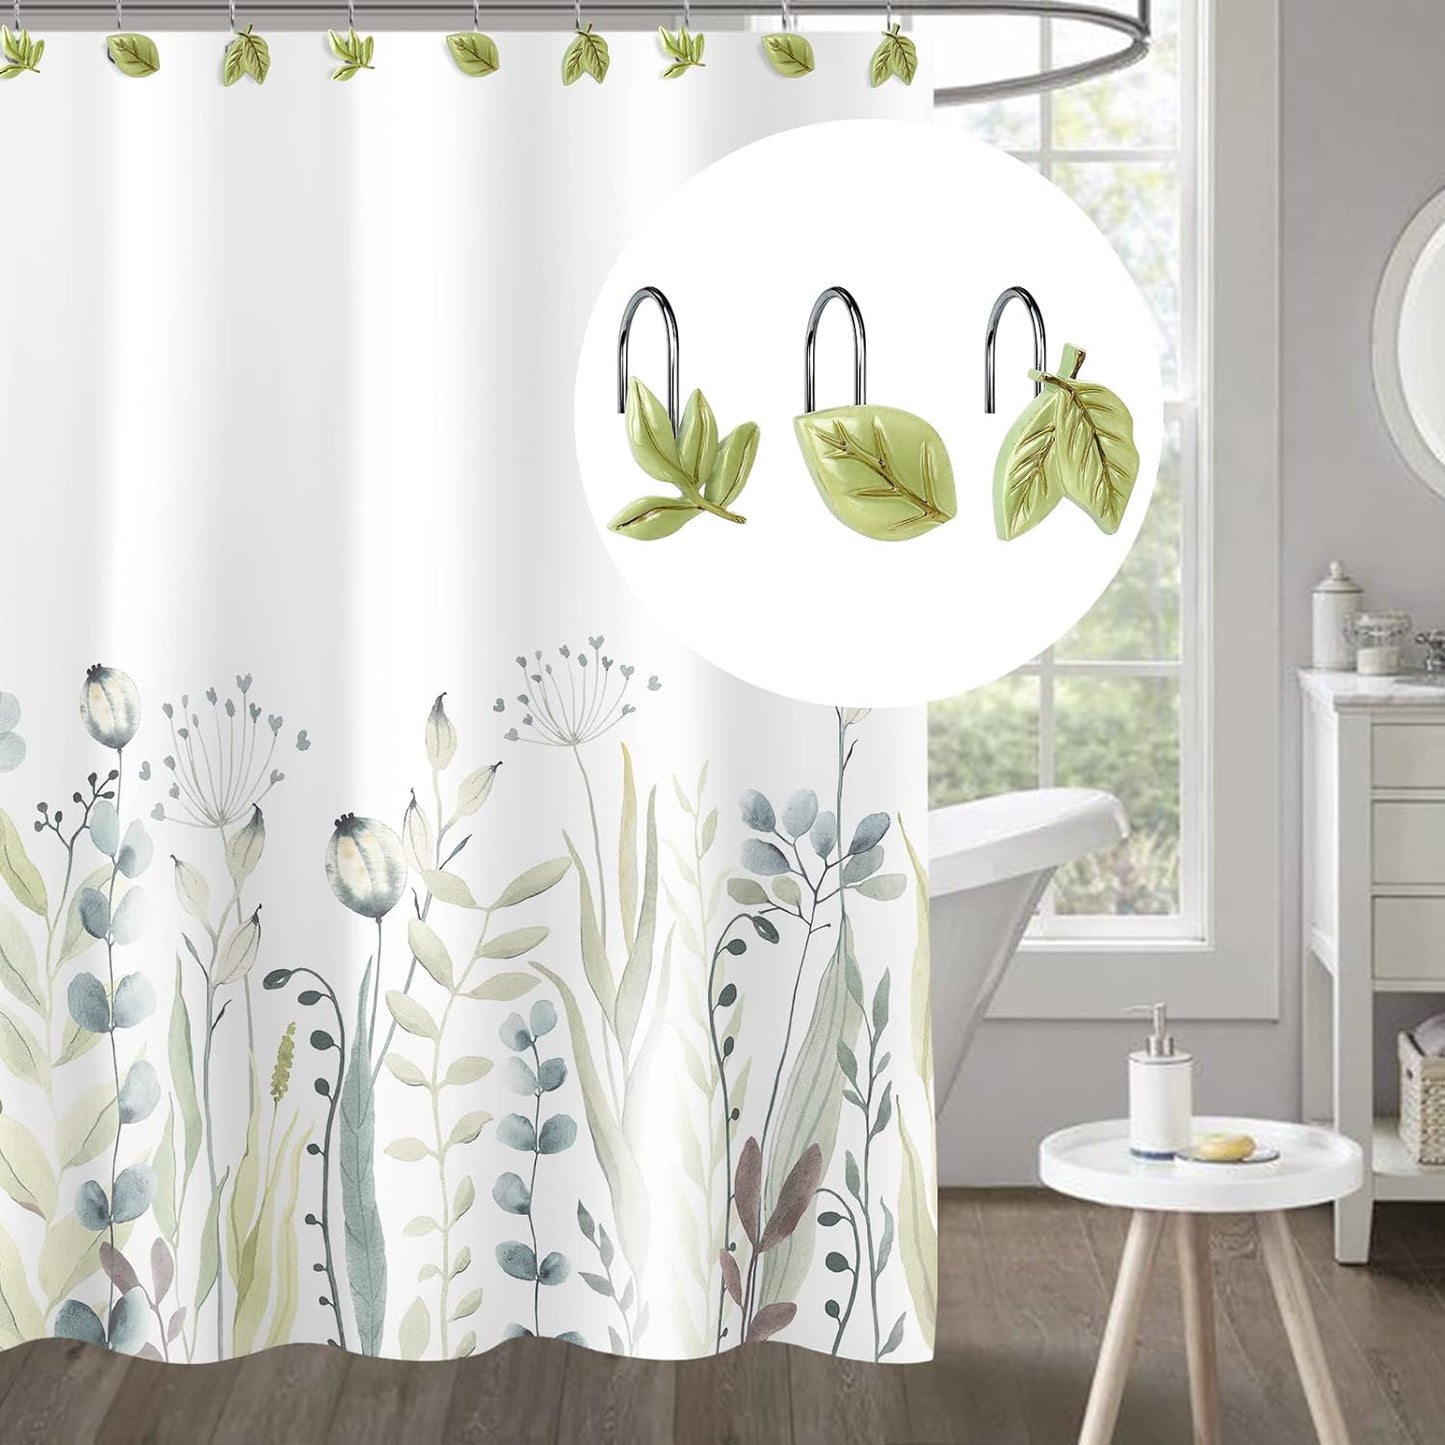 Light Green Plant Leaves Decorative Shower Curtain Hooks, Tropical Botanical Plam Tree Leaf Shower Curtain Rings for Bathroom, Resin, Cute Shower Curtain Hanger Hooks Bathroom Decor, Set of 12